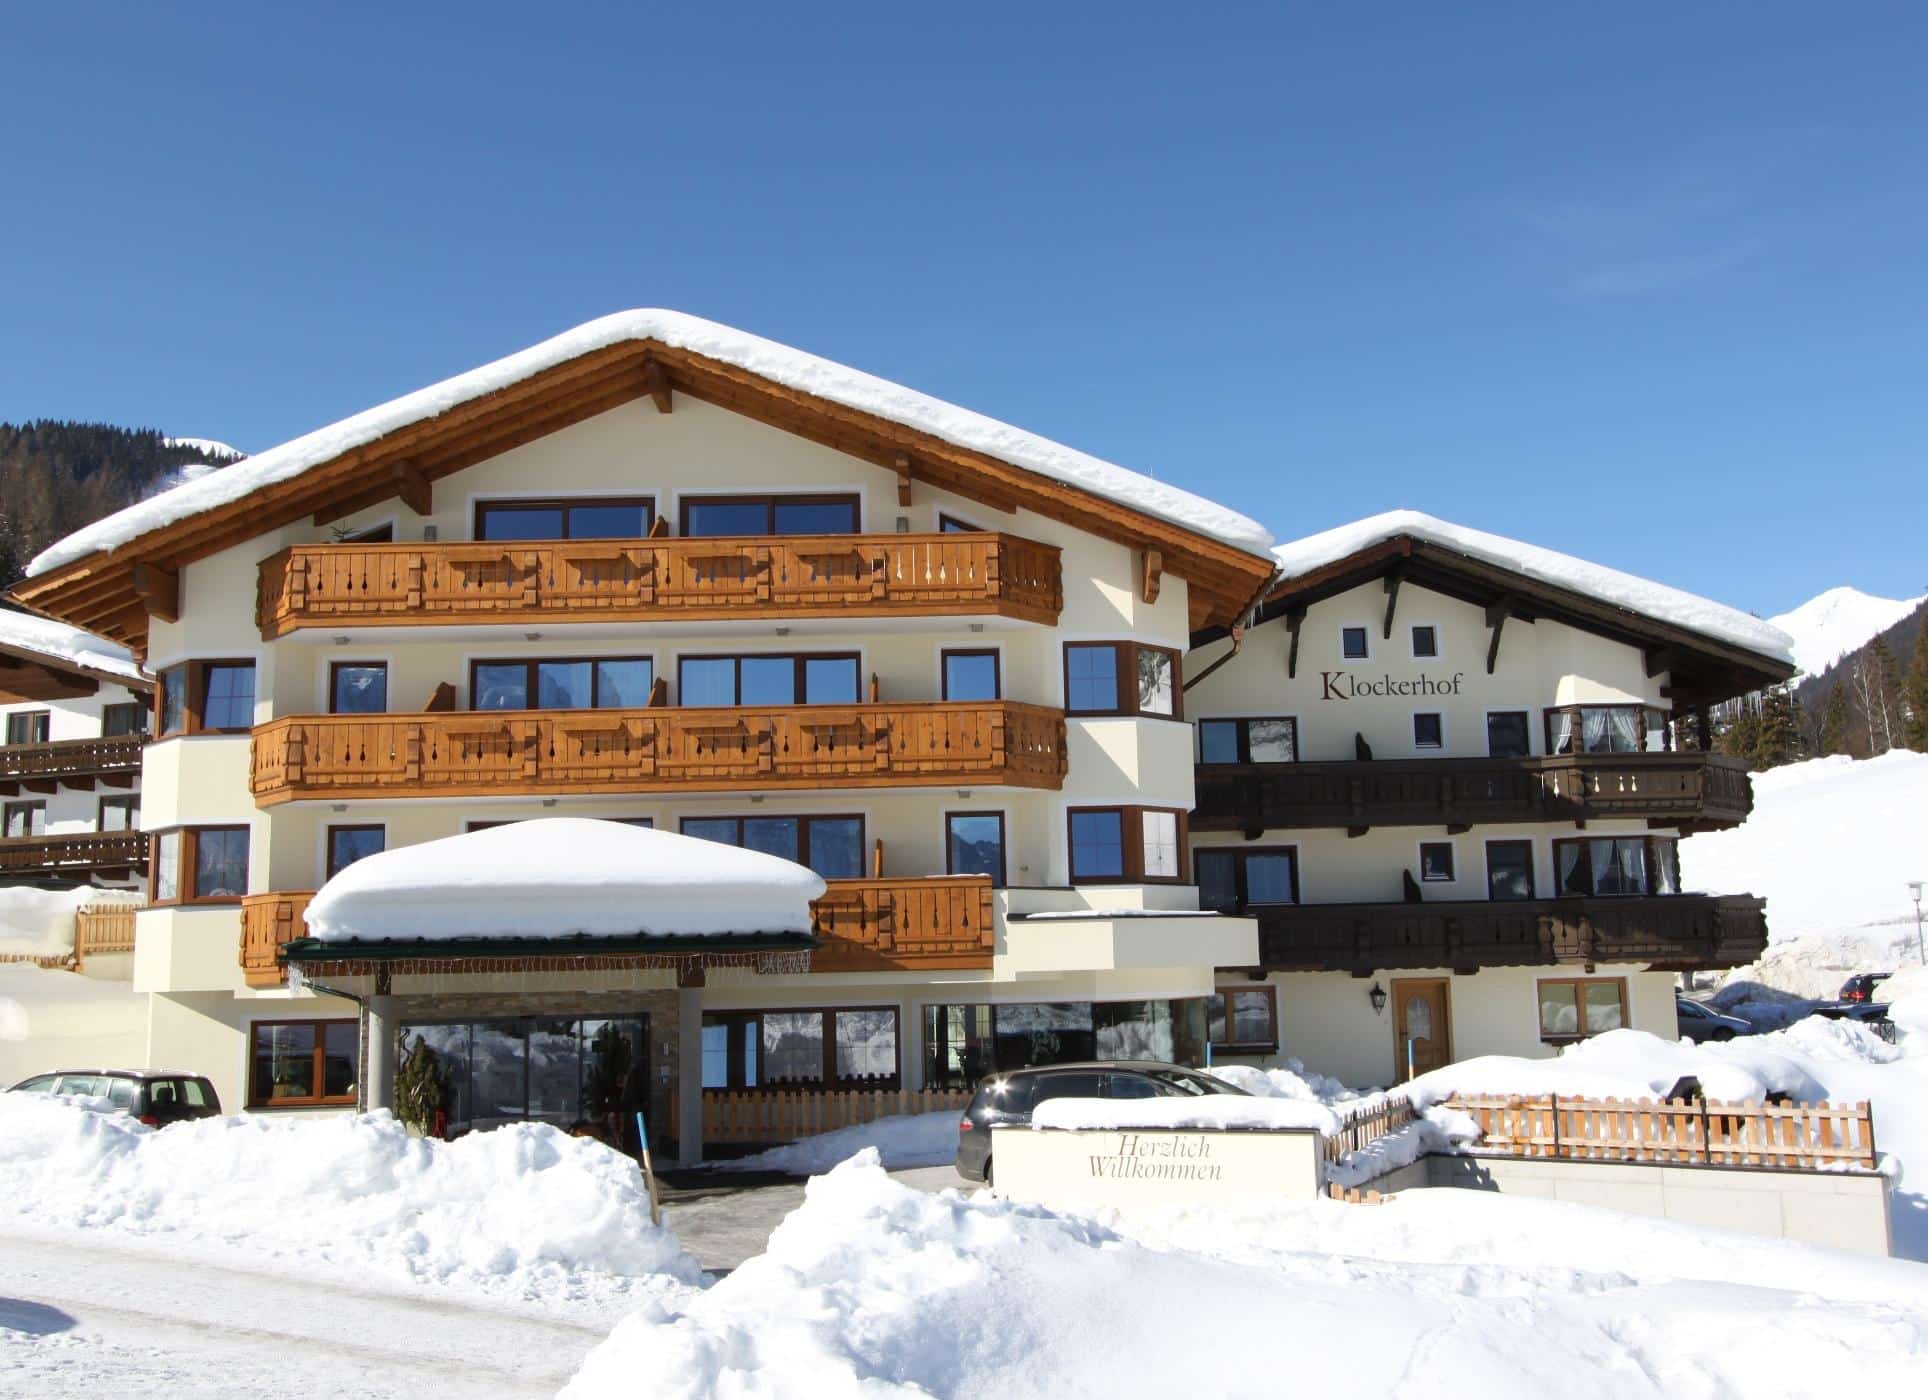 Vacances d' hiver à l'hôtel Klockerhof en Tyrol